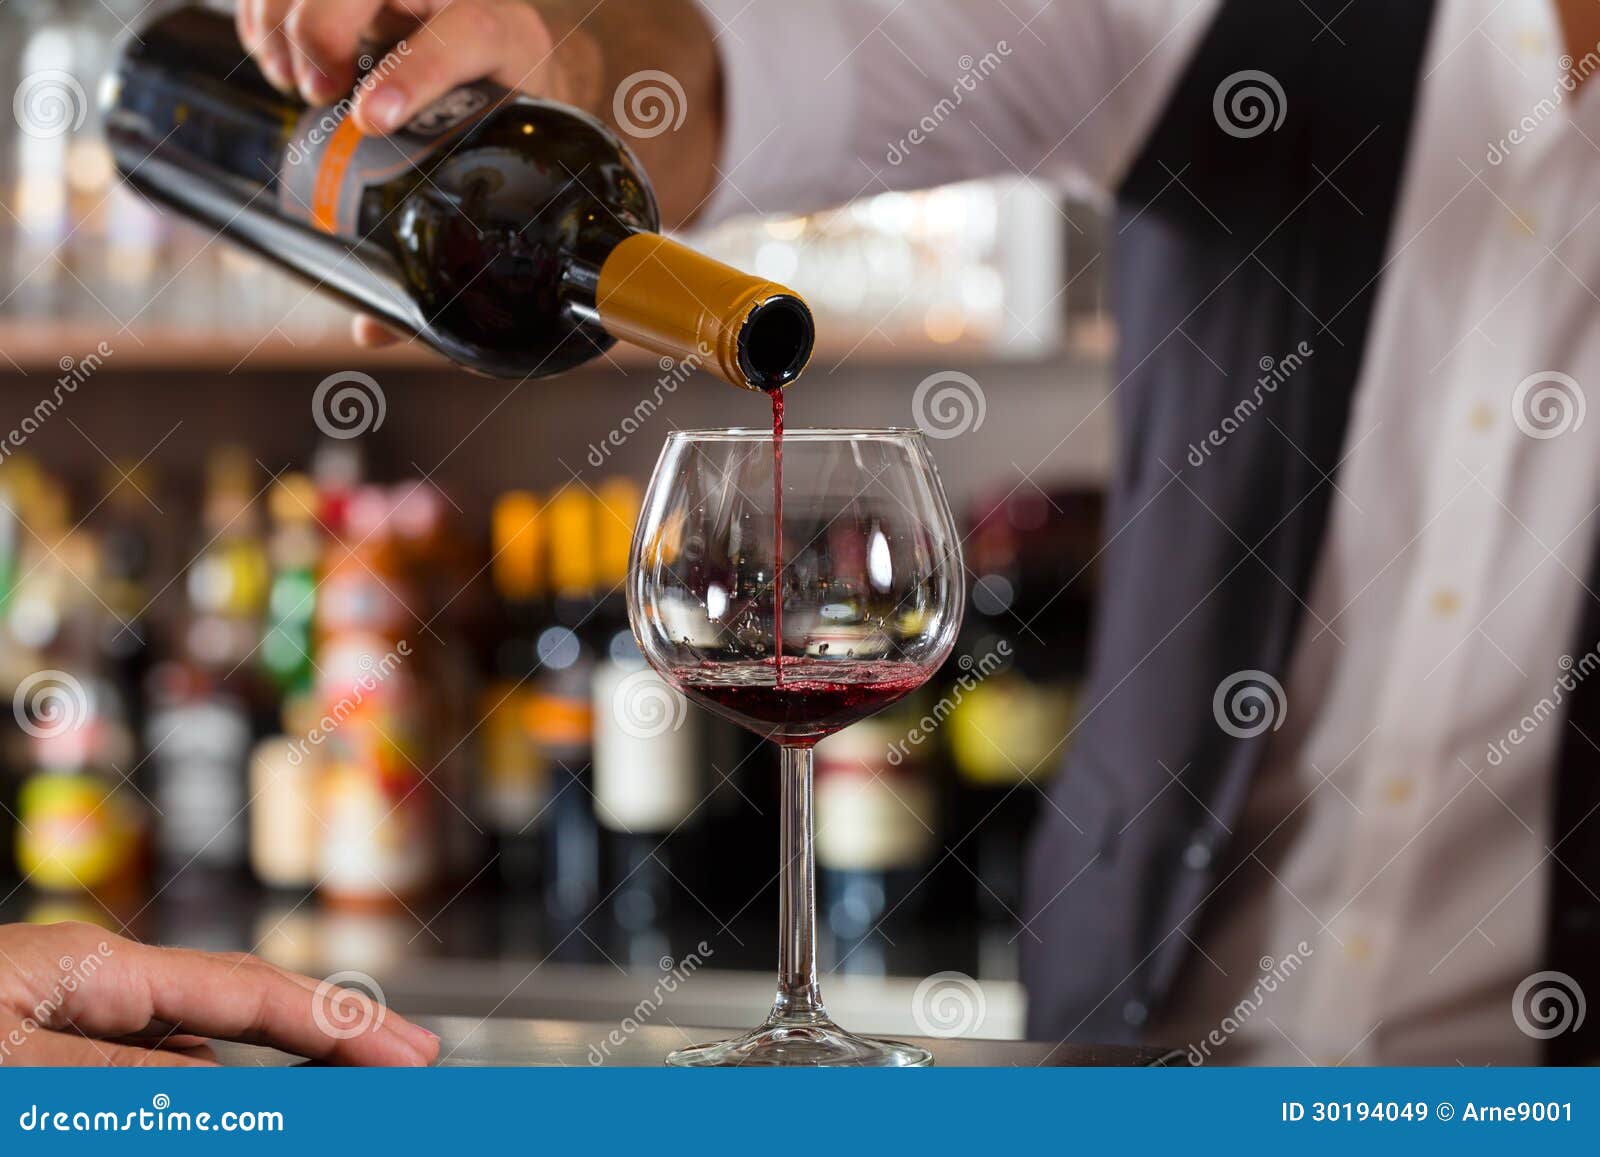 Бармен бокал вина. Бокал вина в баре. Бармен наливает вино. Вино наливают в бокал. Вино в баре.